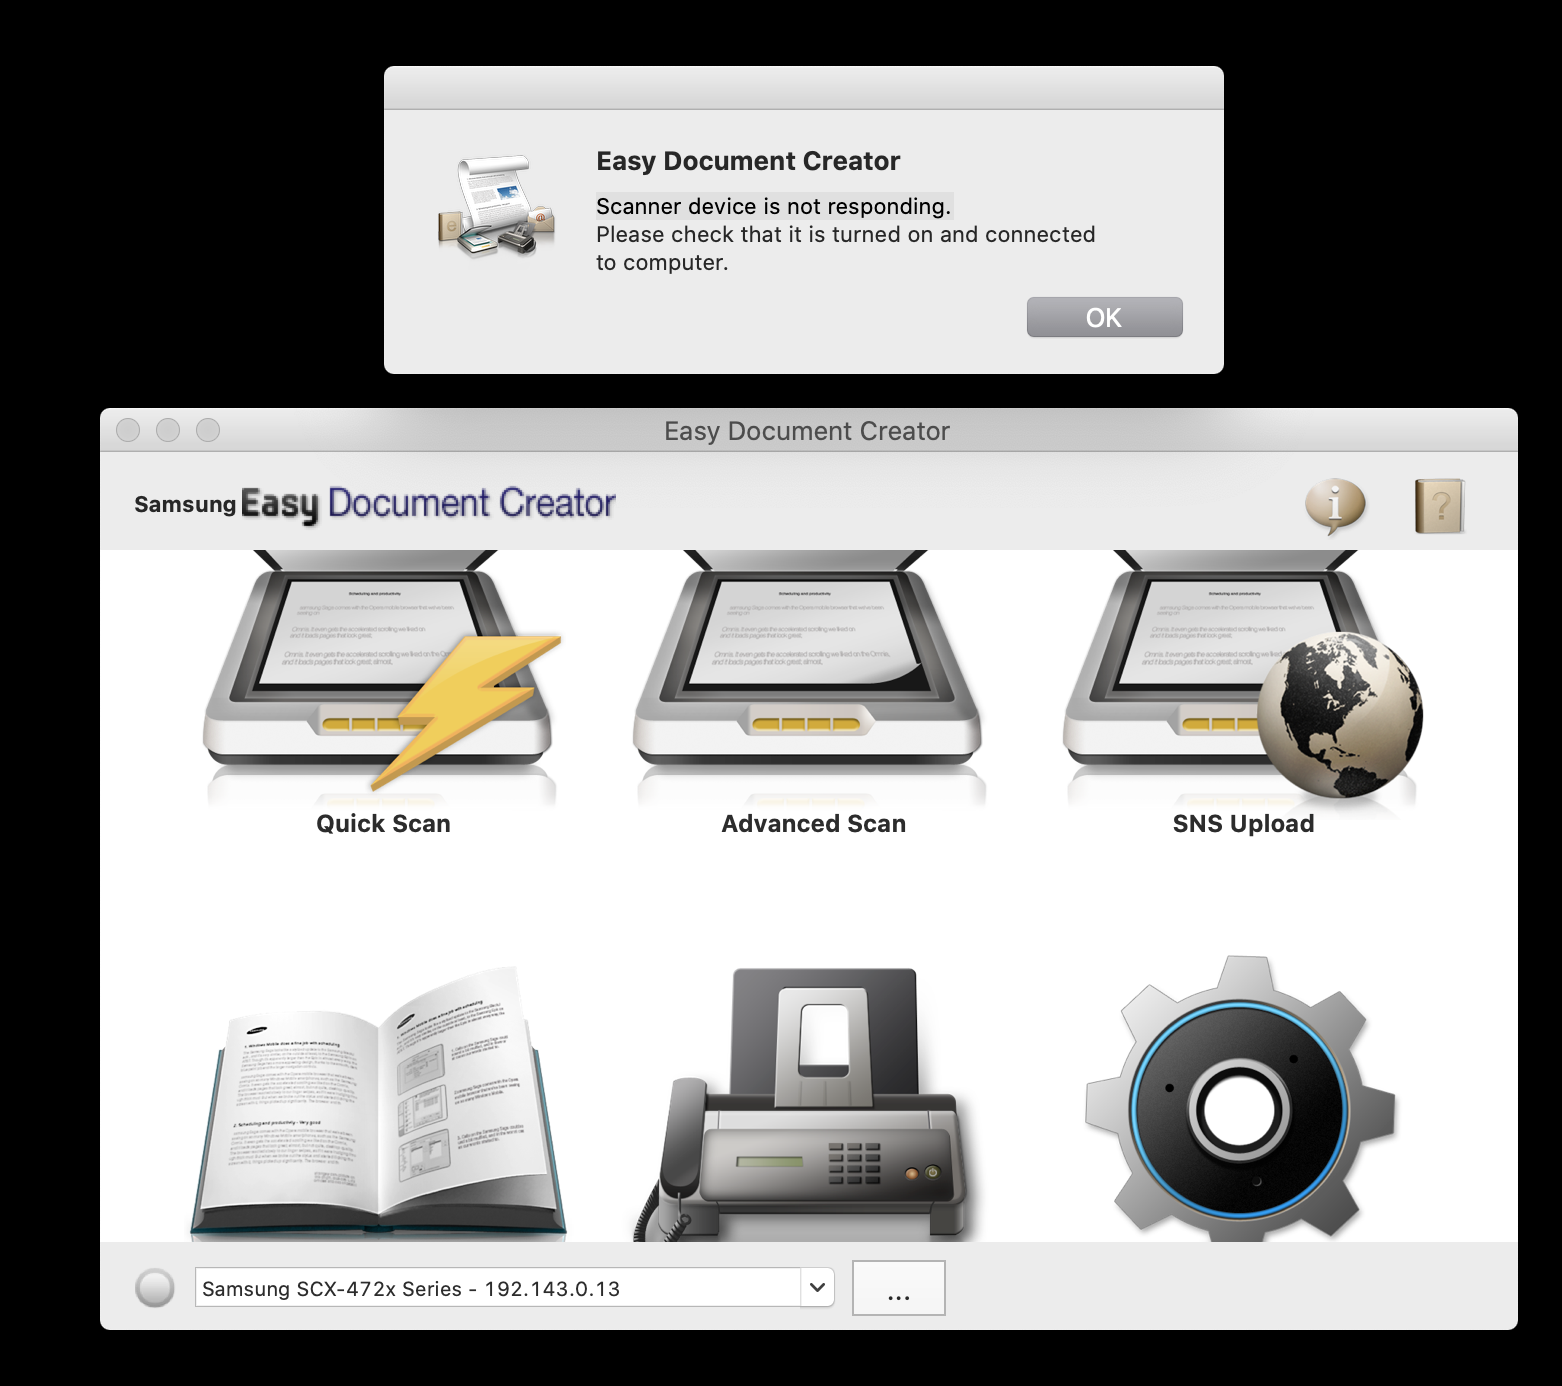 samsung easy document creator scanner not working